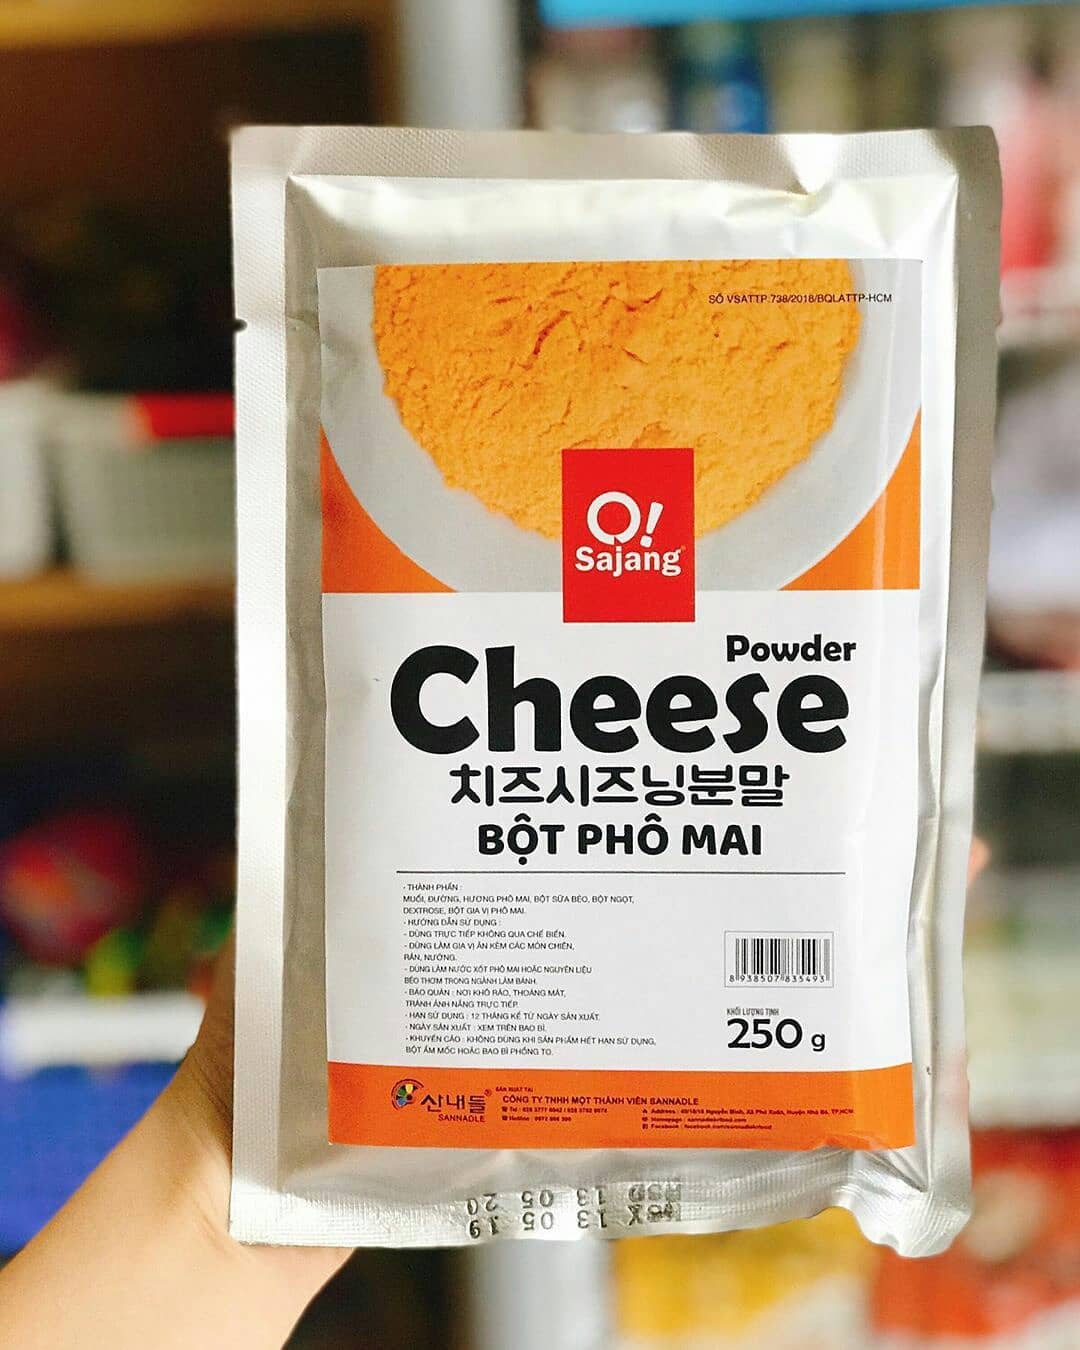 Bột Phô Mai Cheese Gói 250g Cao Cấp